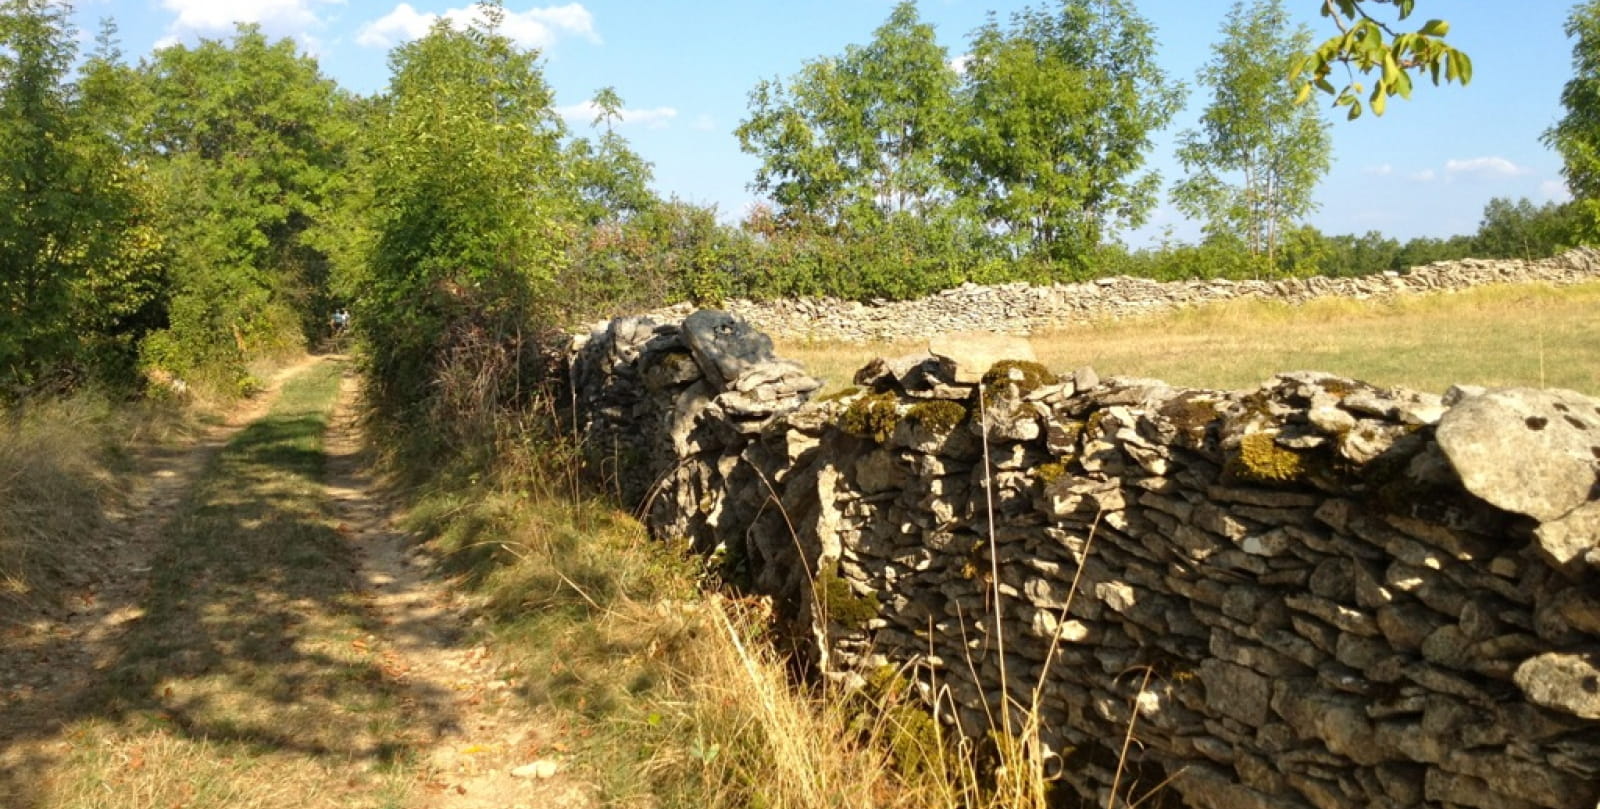 Lugagnac: Low wall path in dry stones